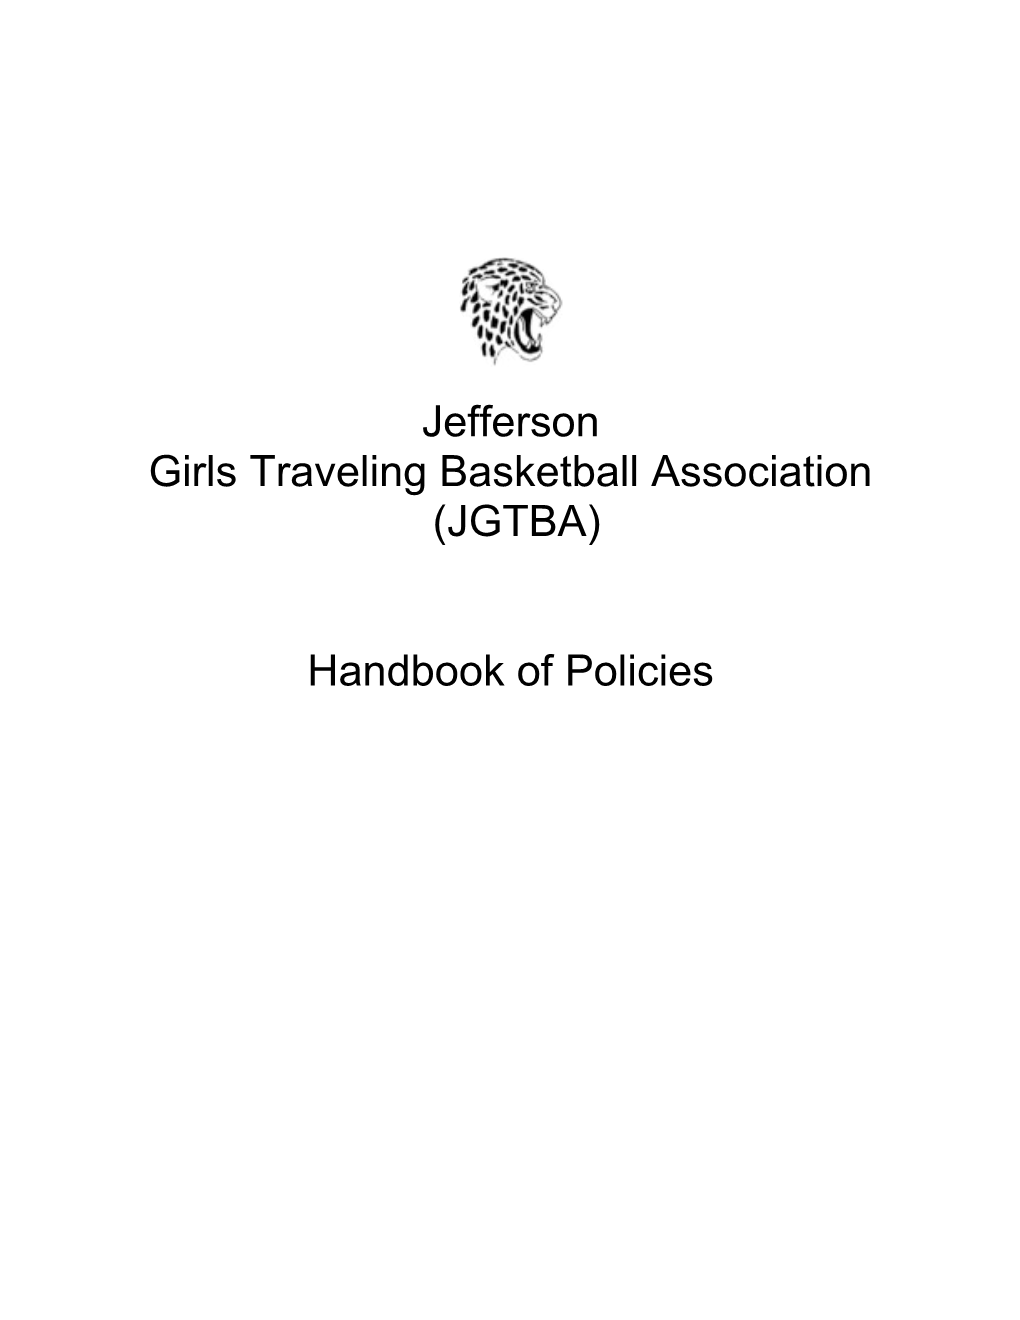 Girls Traveling Basketball Association